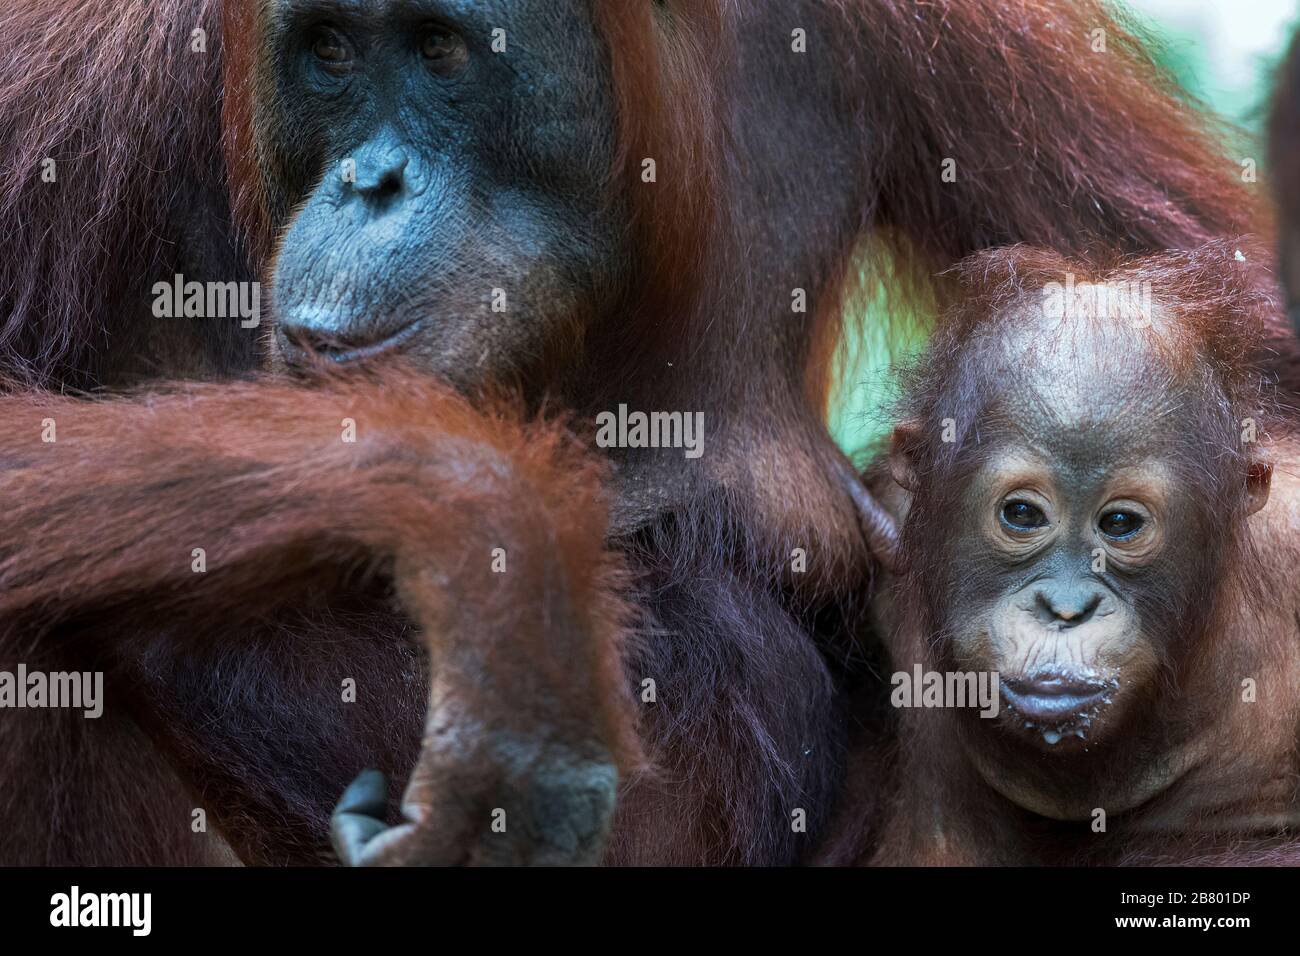 The image of Mother and baby Bornean orangutan (Pongo pygmaeus) in